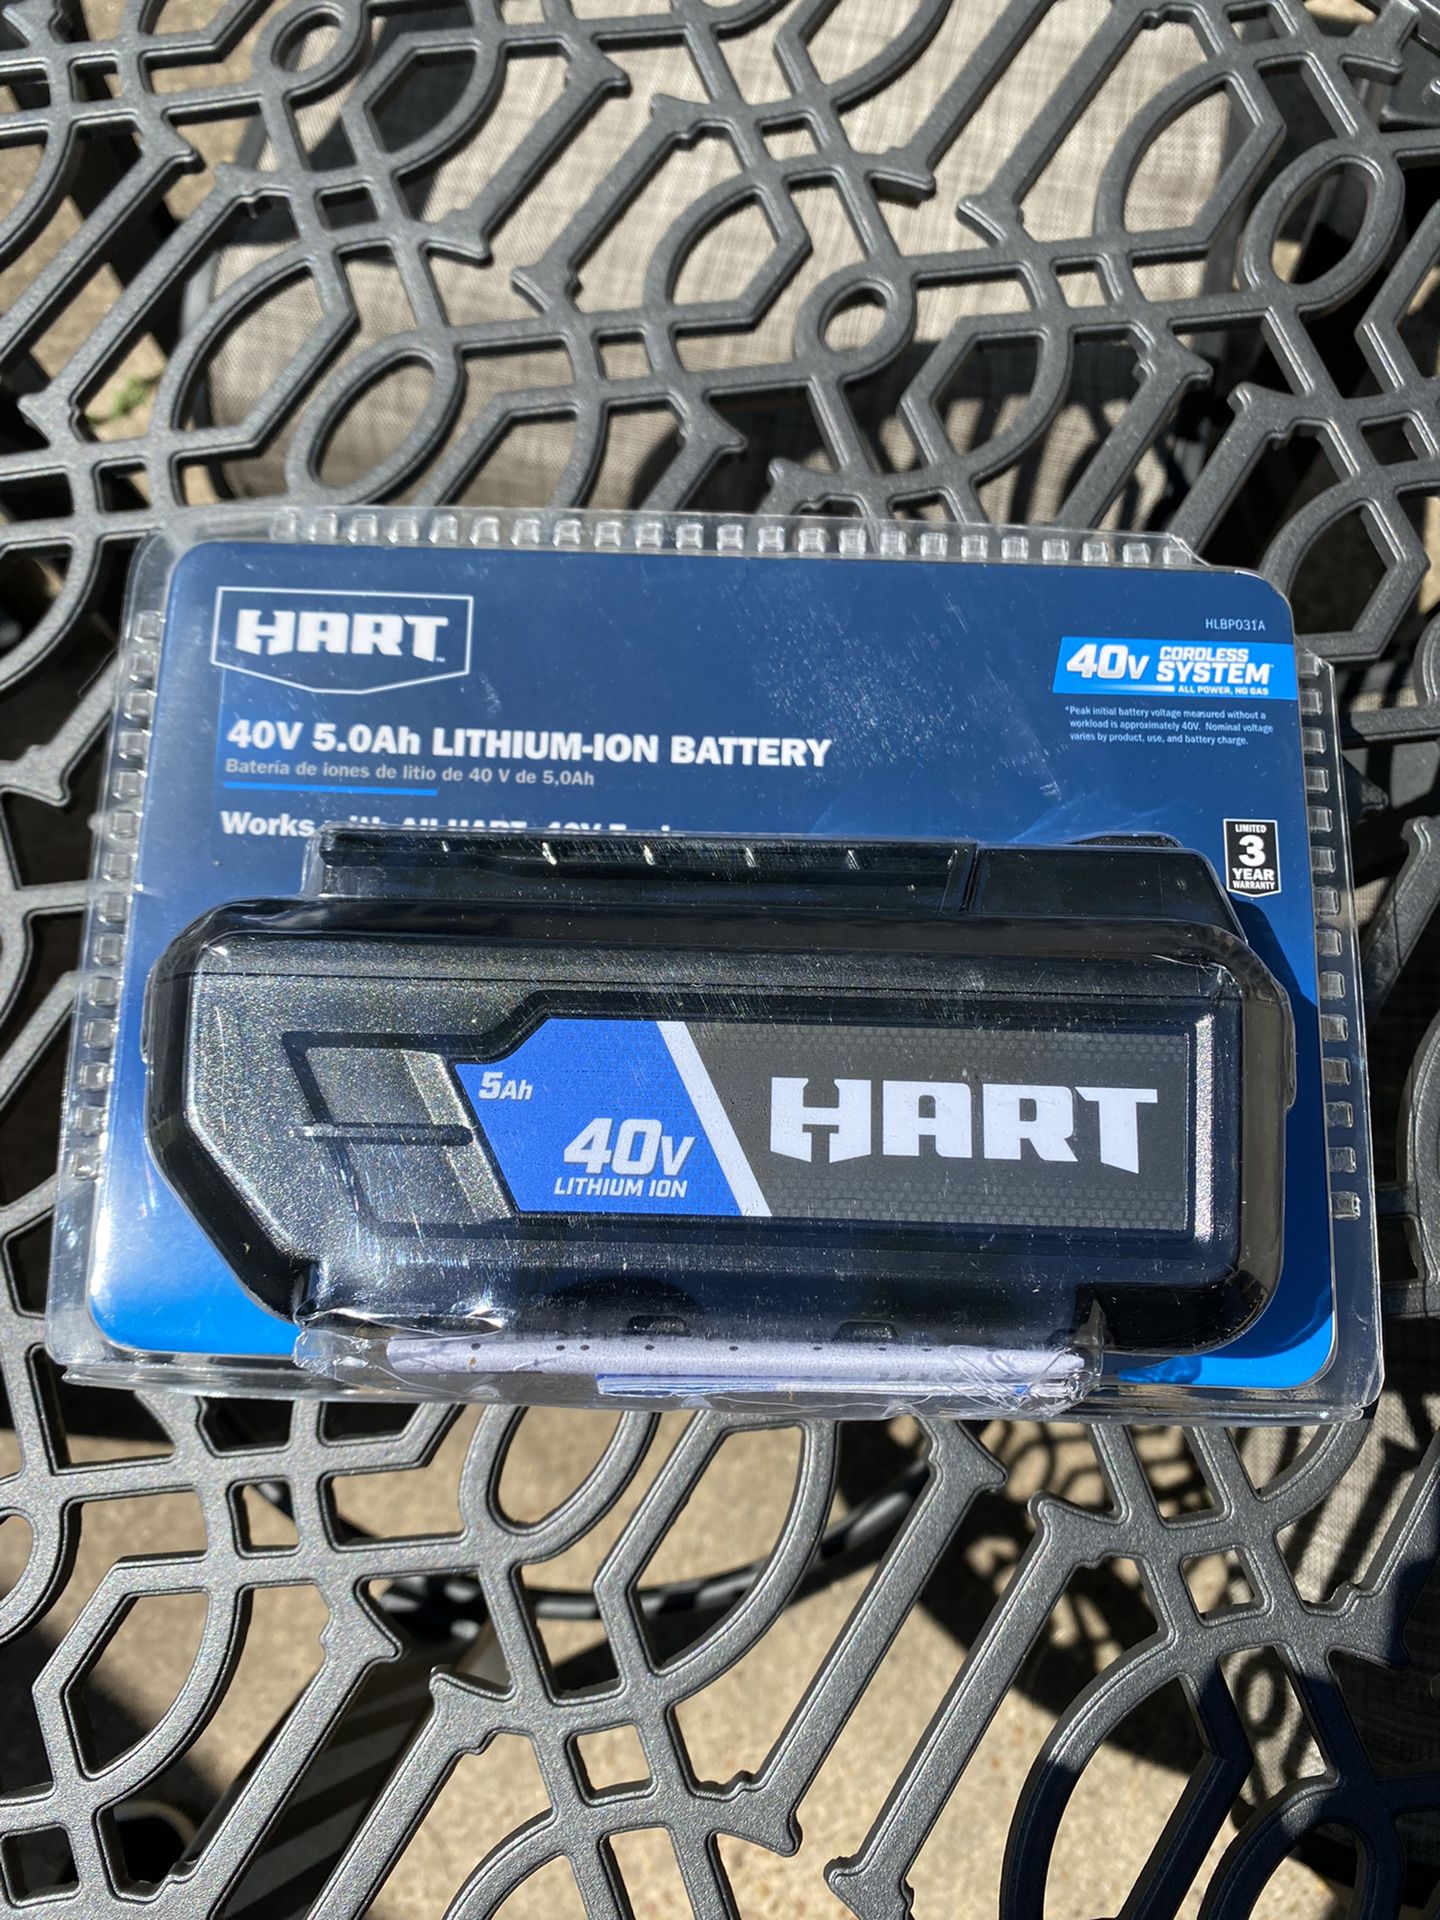 Hart 40v 5.0ah Lithium-ion Battery